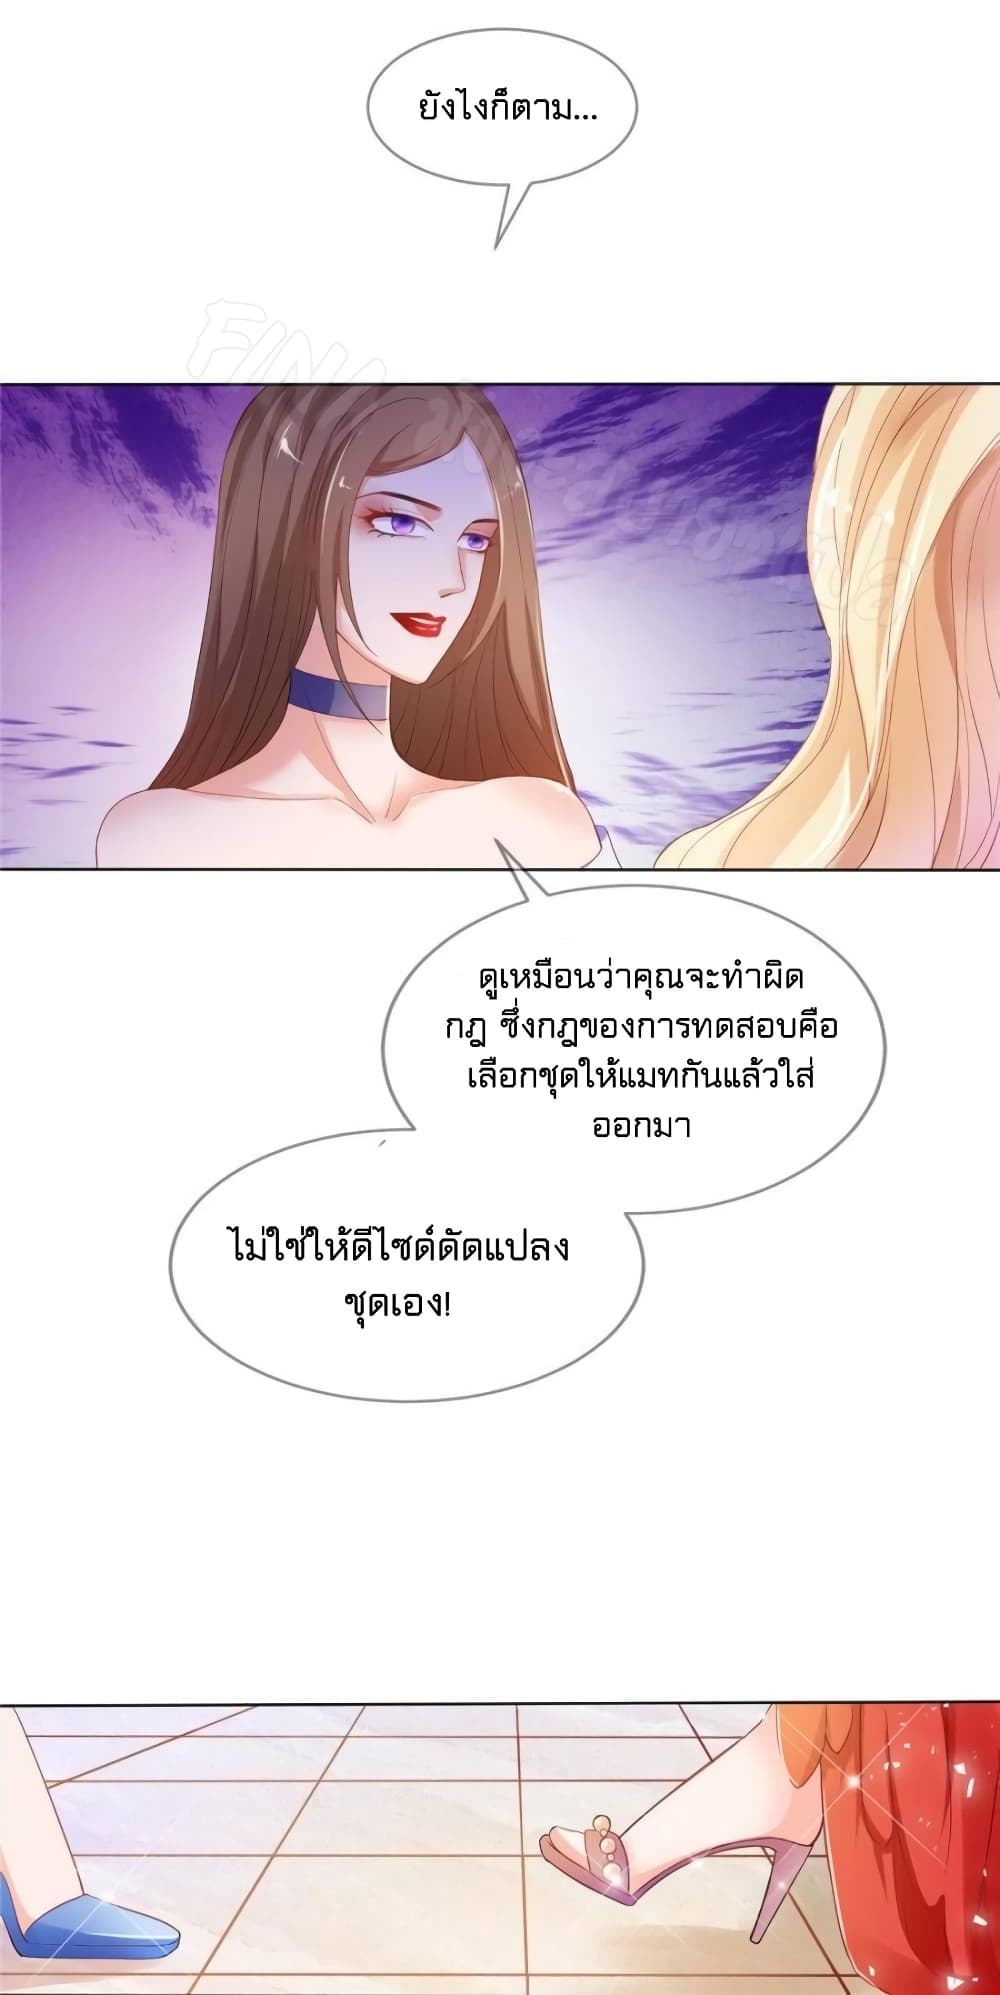 Prince Charming’s Lovely Gaze Comics 6-6